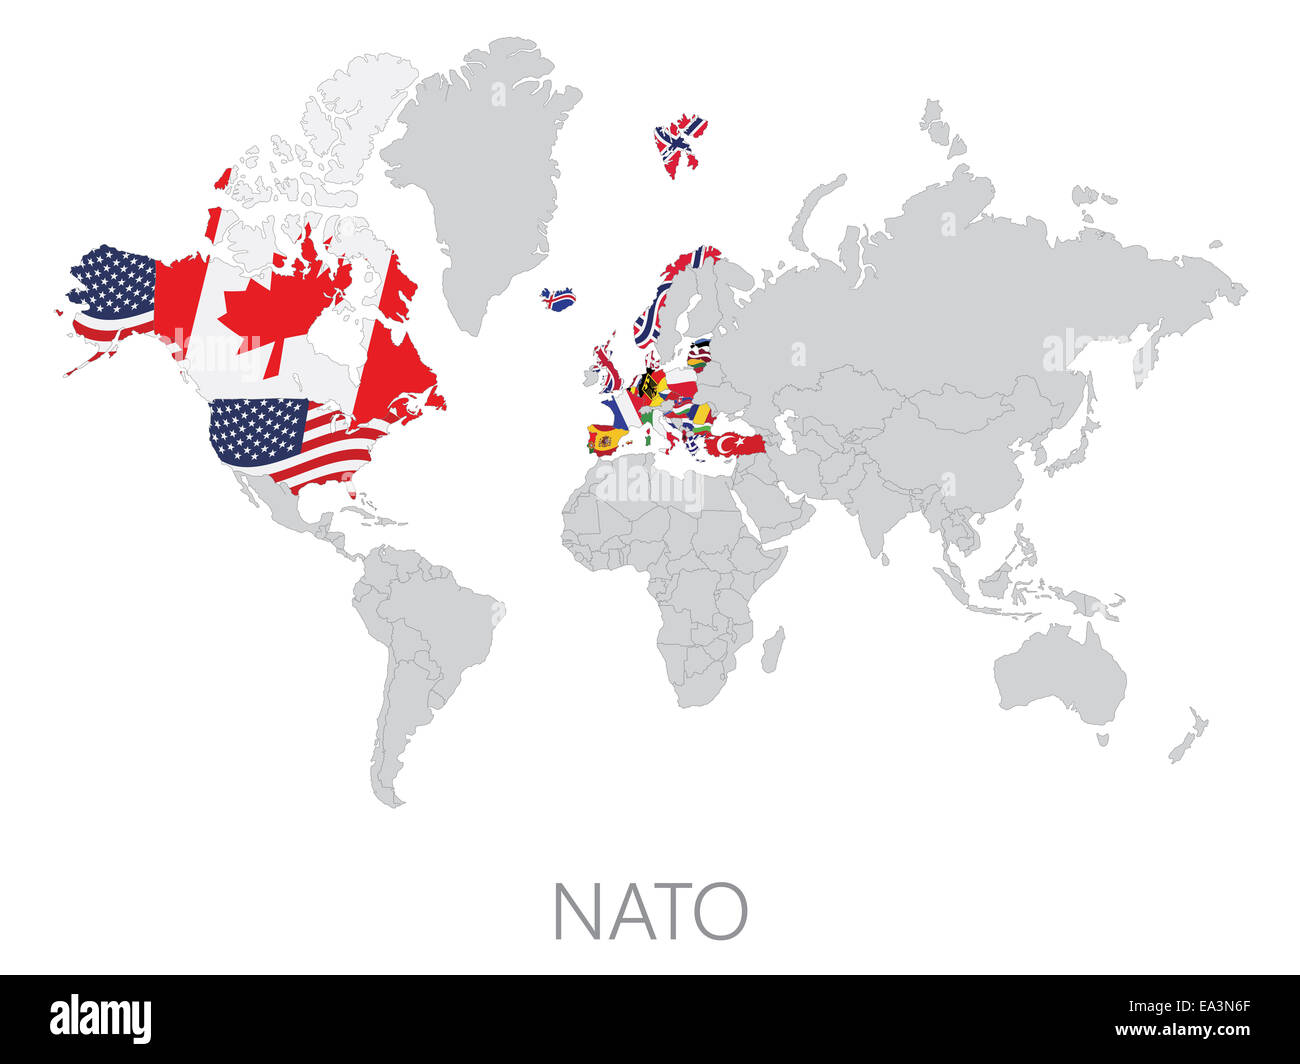 Nato on world map Stock Photo